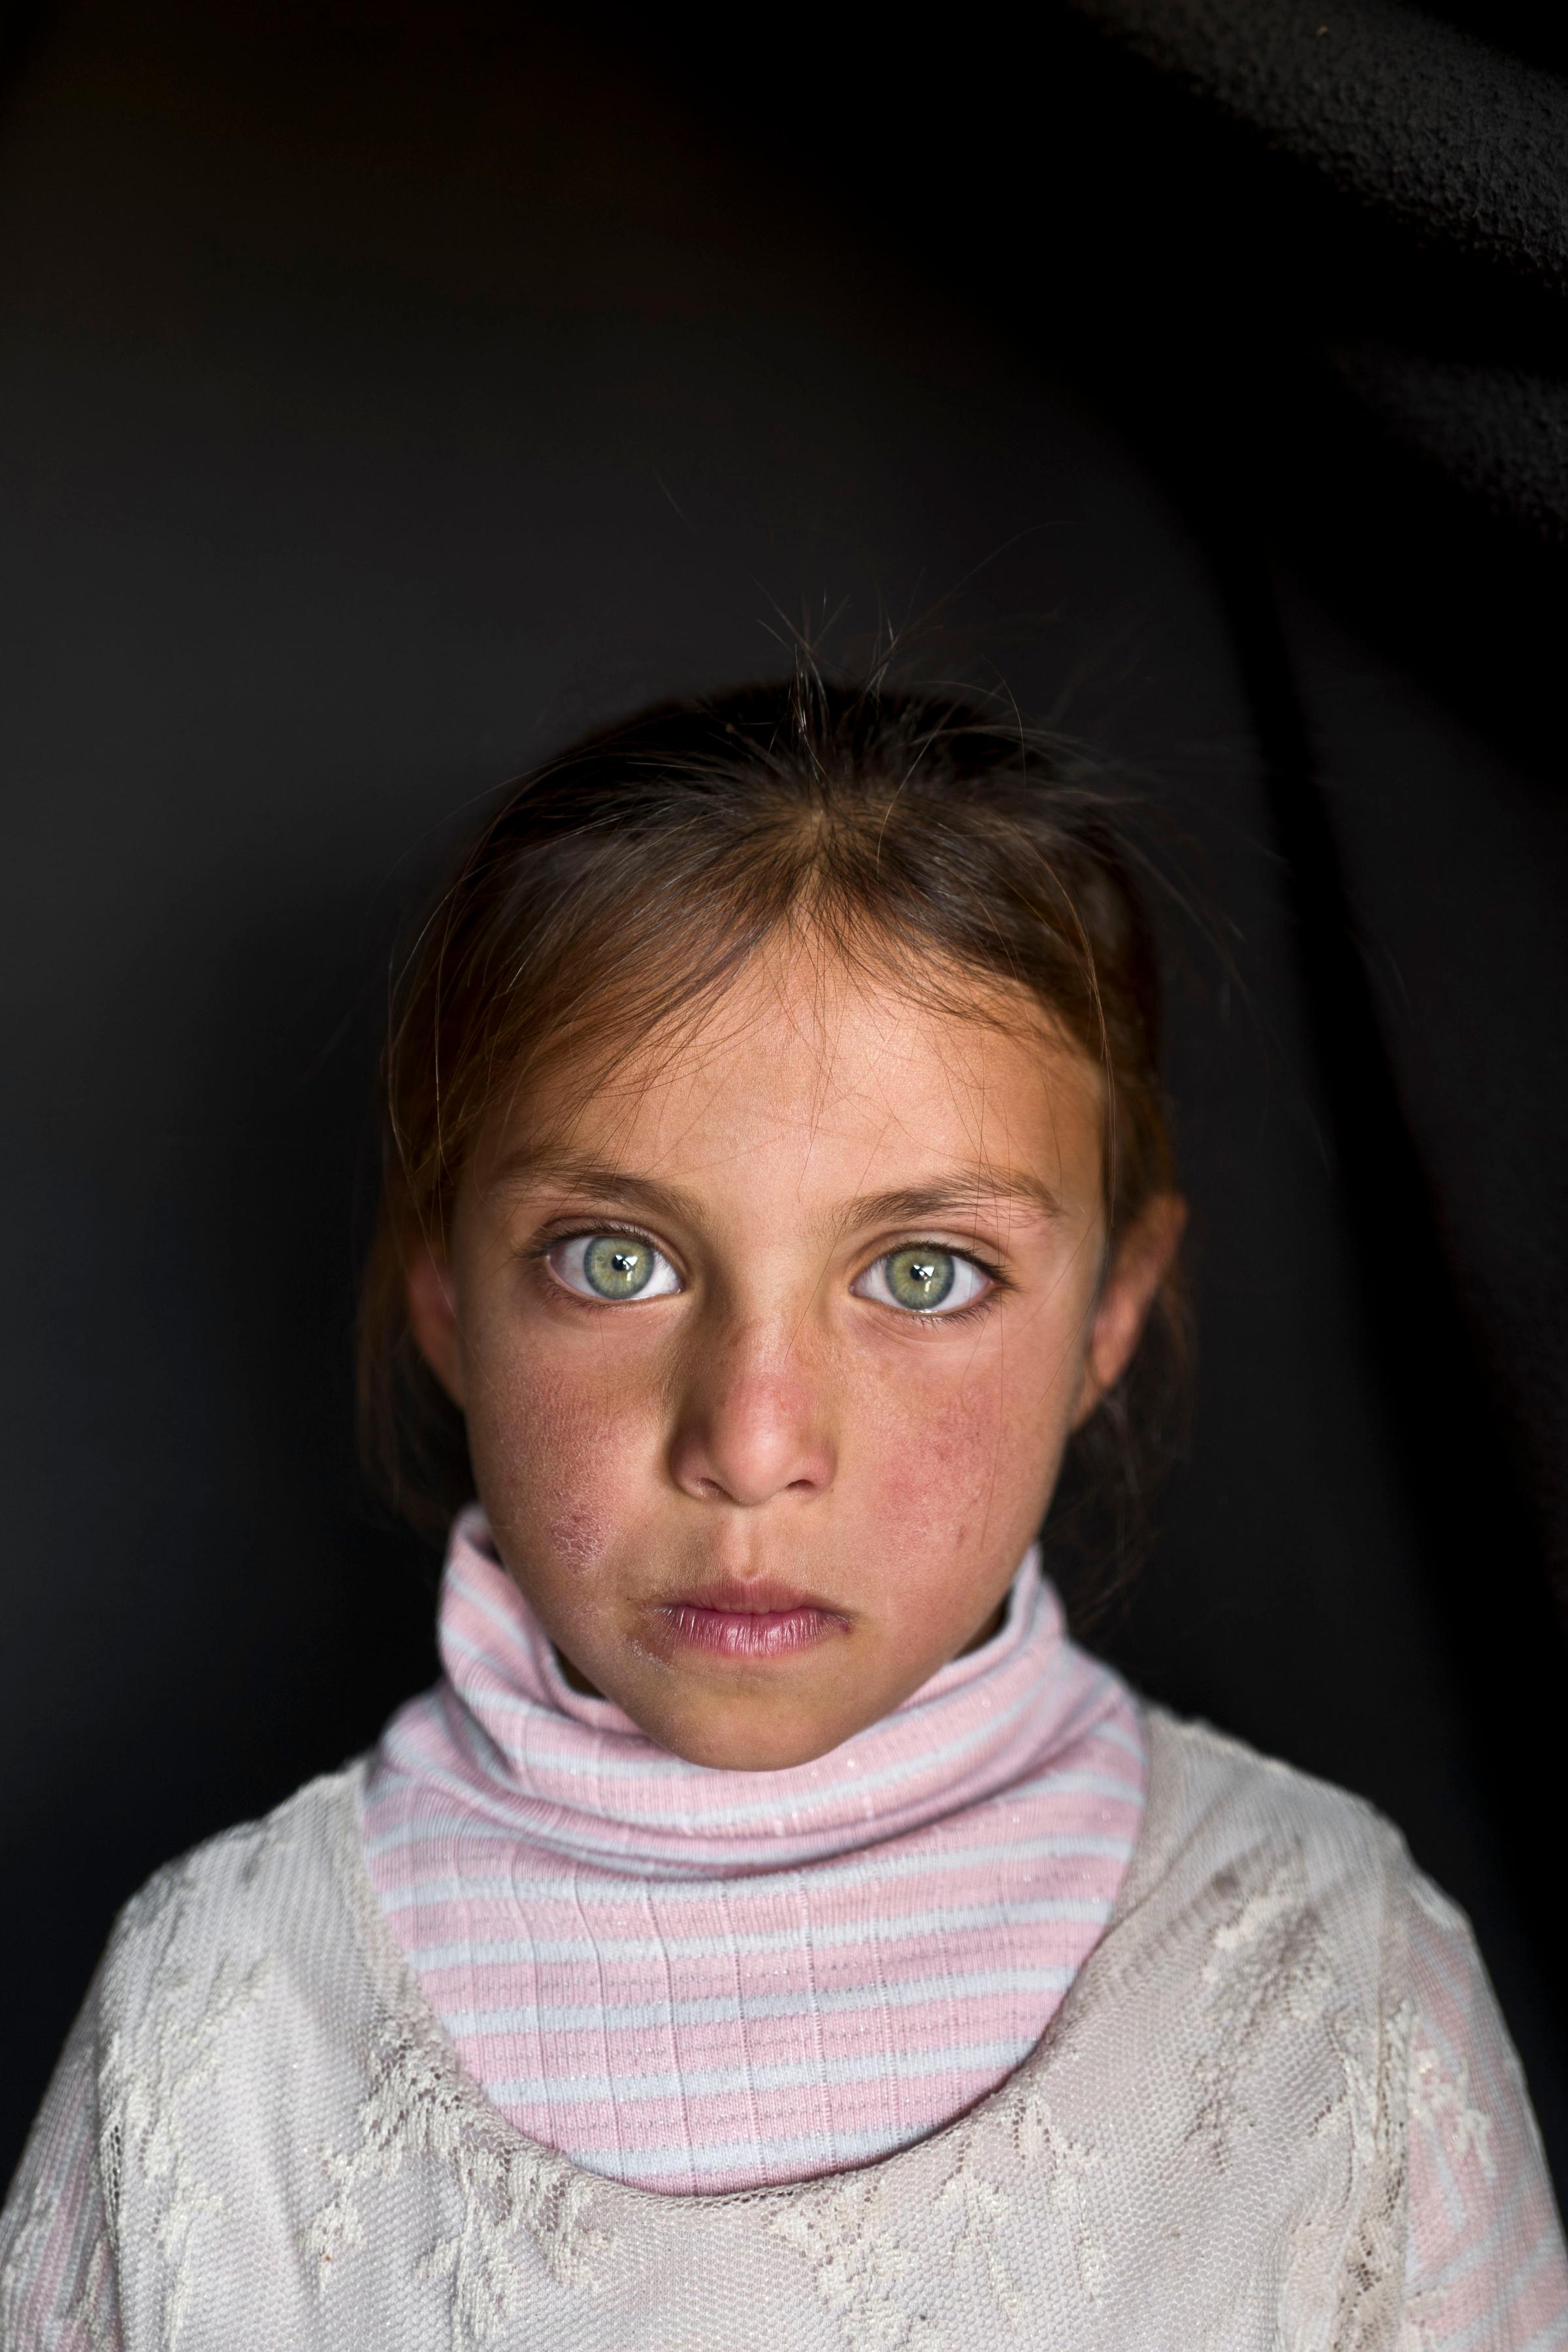 Mideast Jordan Displaced Syrian Children Photo Essay